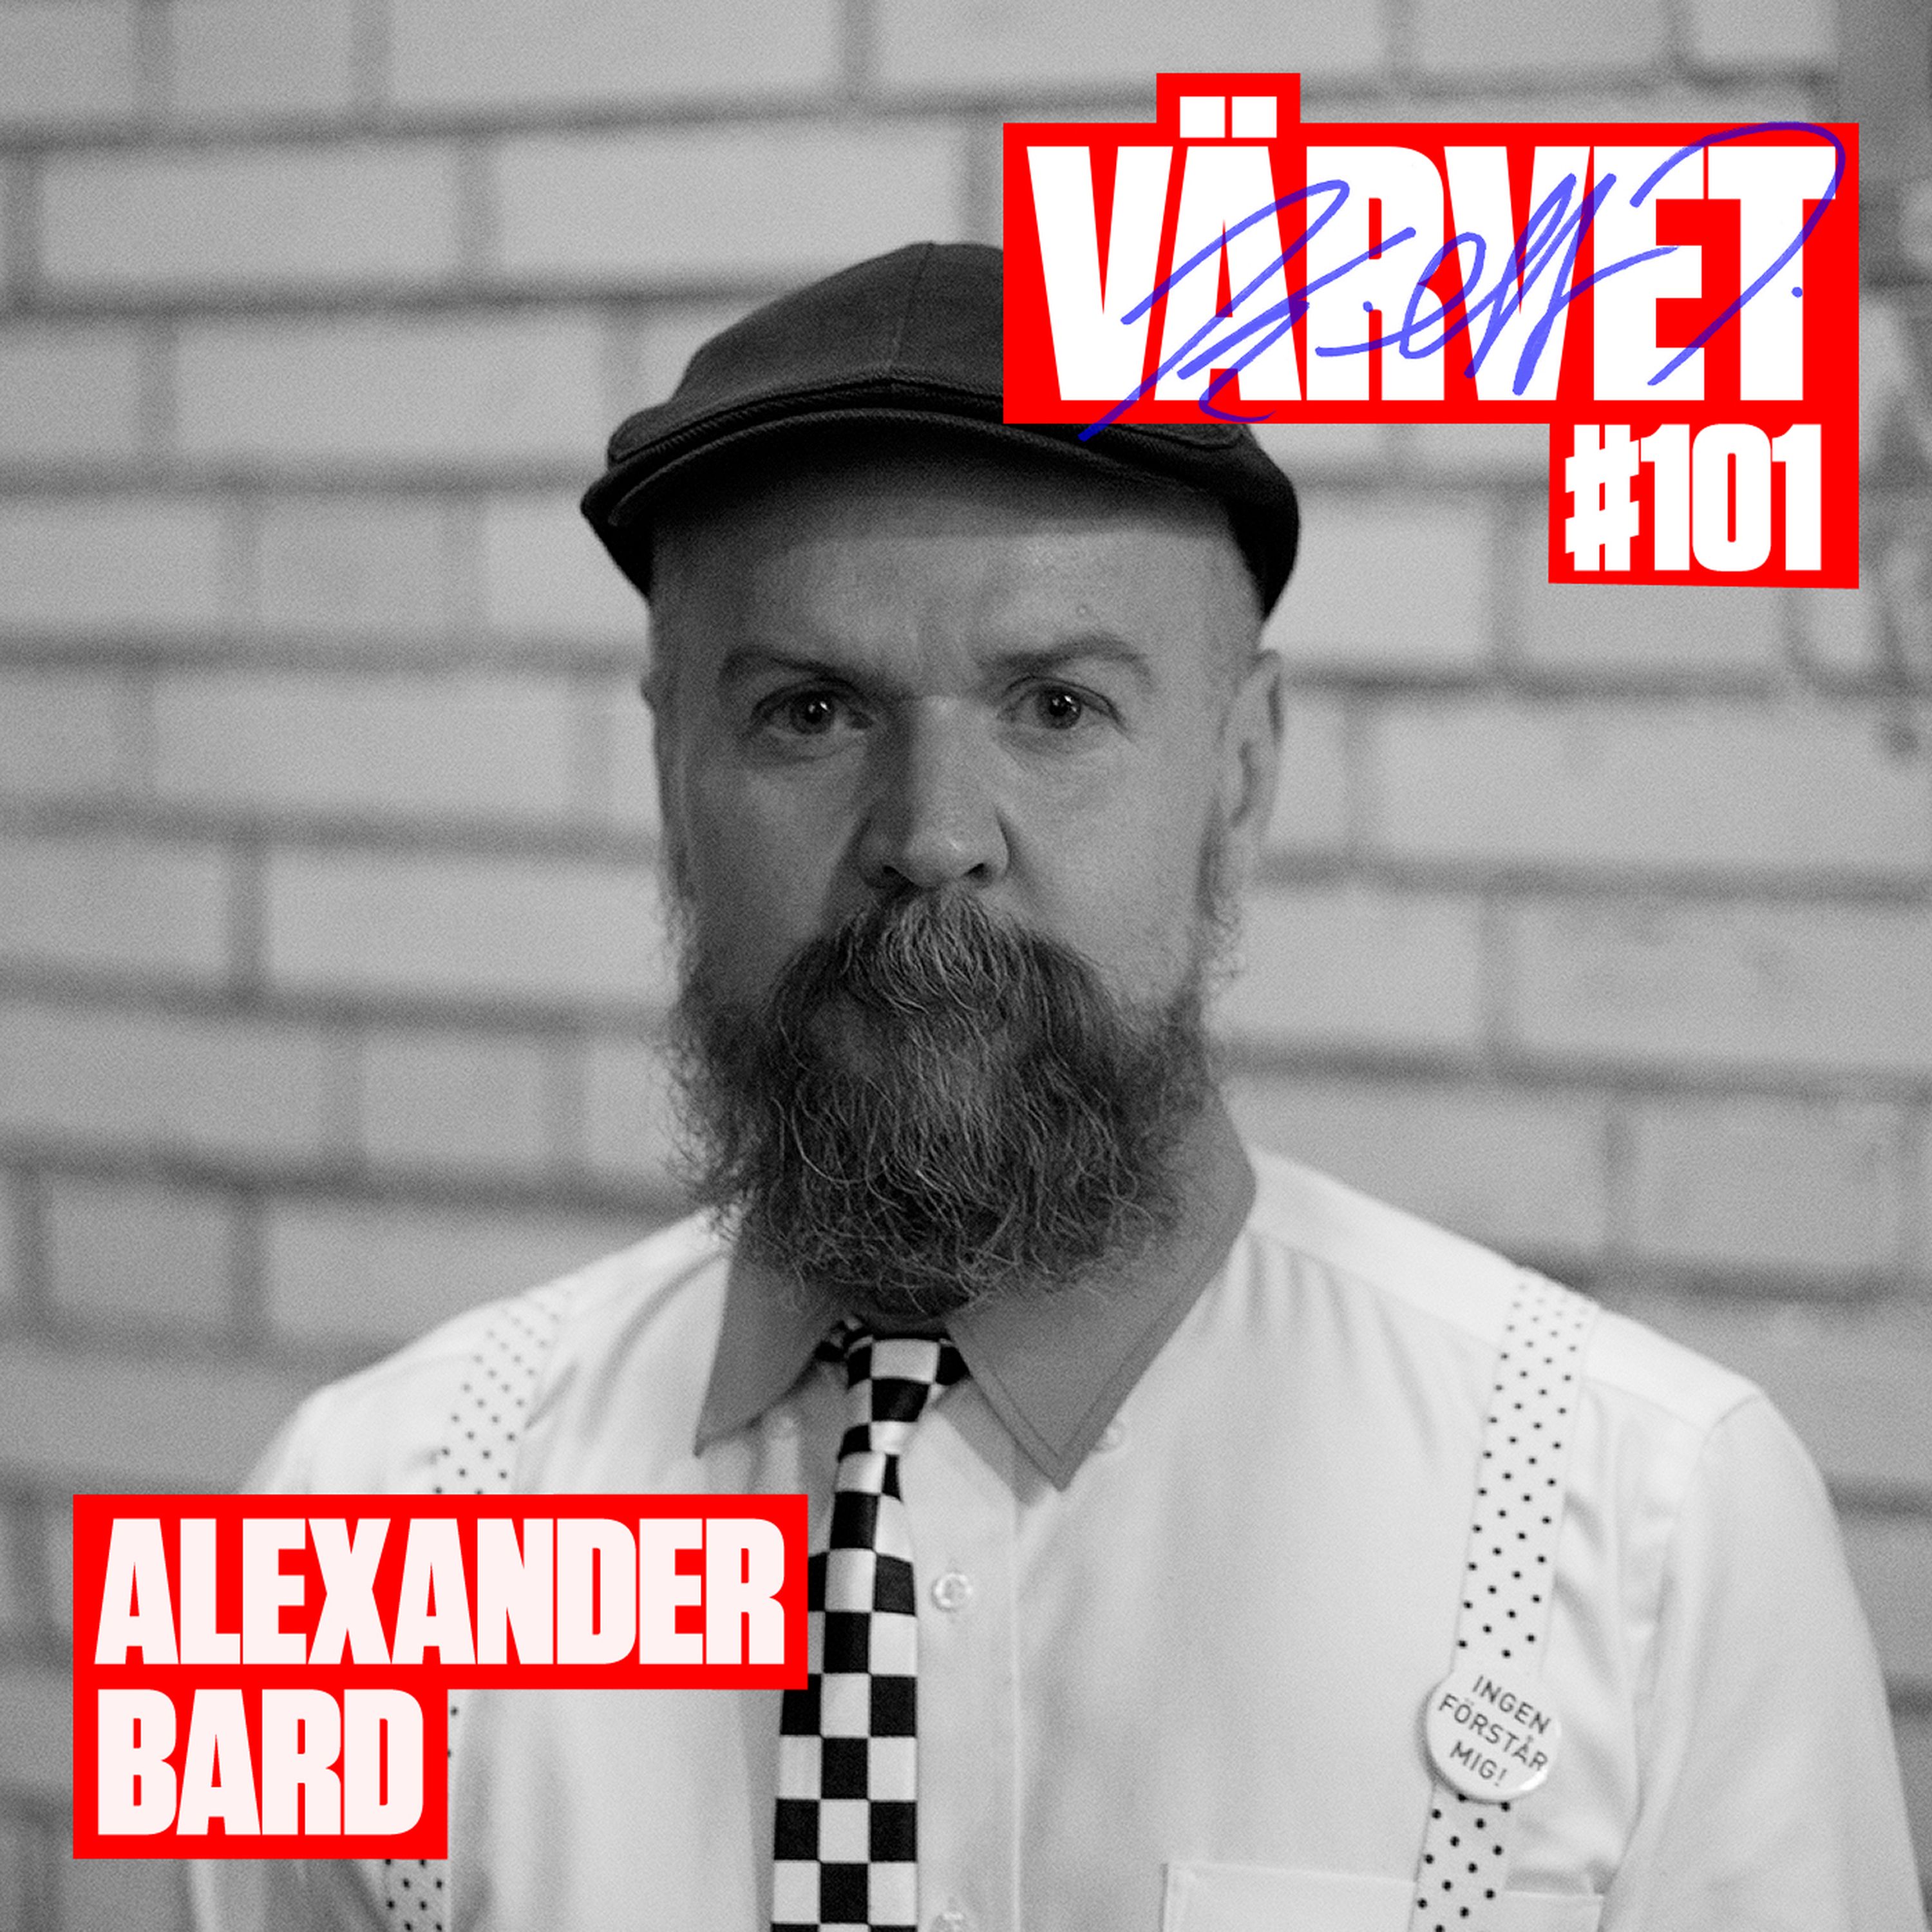 #101: Alexander Bard